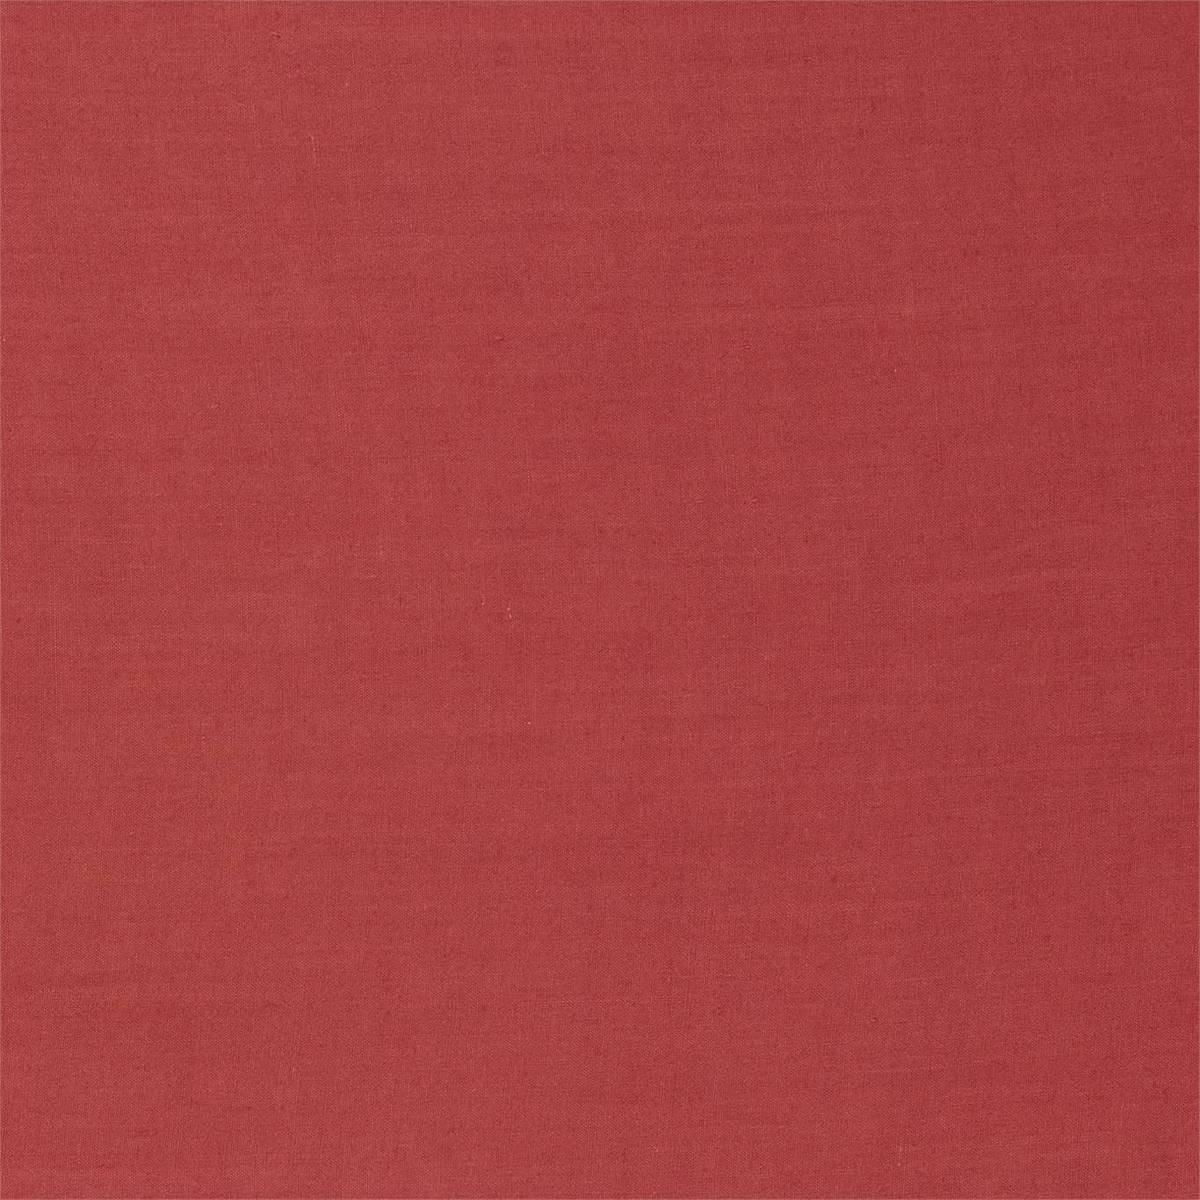 Ruskin Carmine Fabric by William Morris & Co.